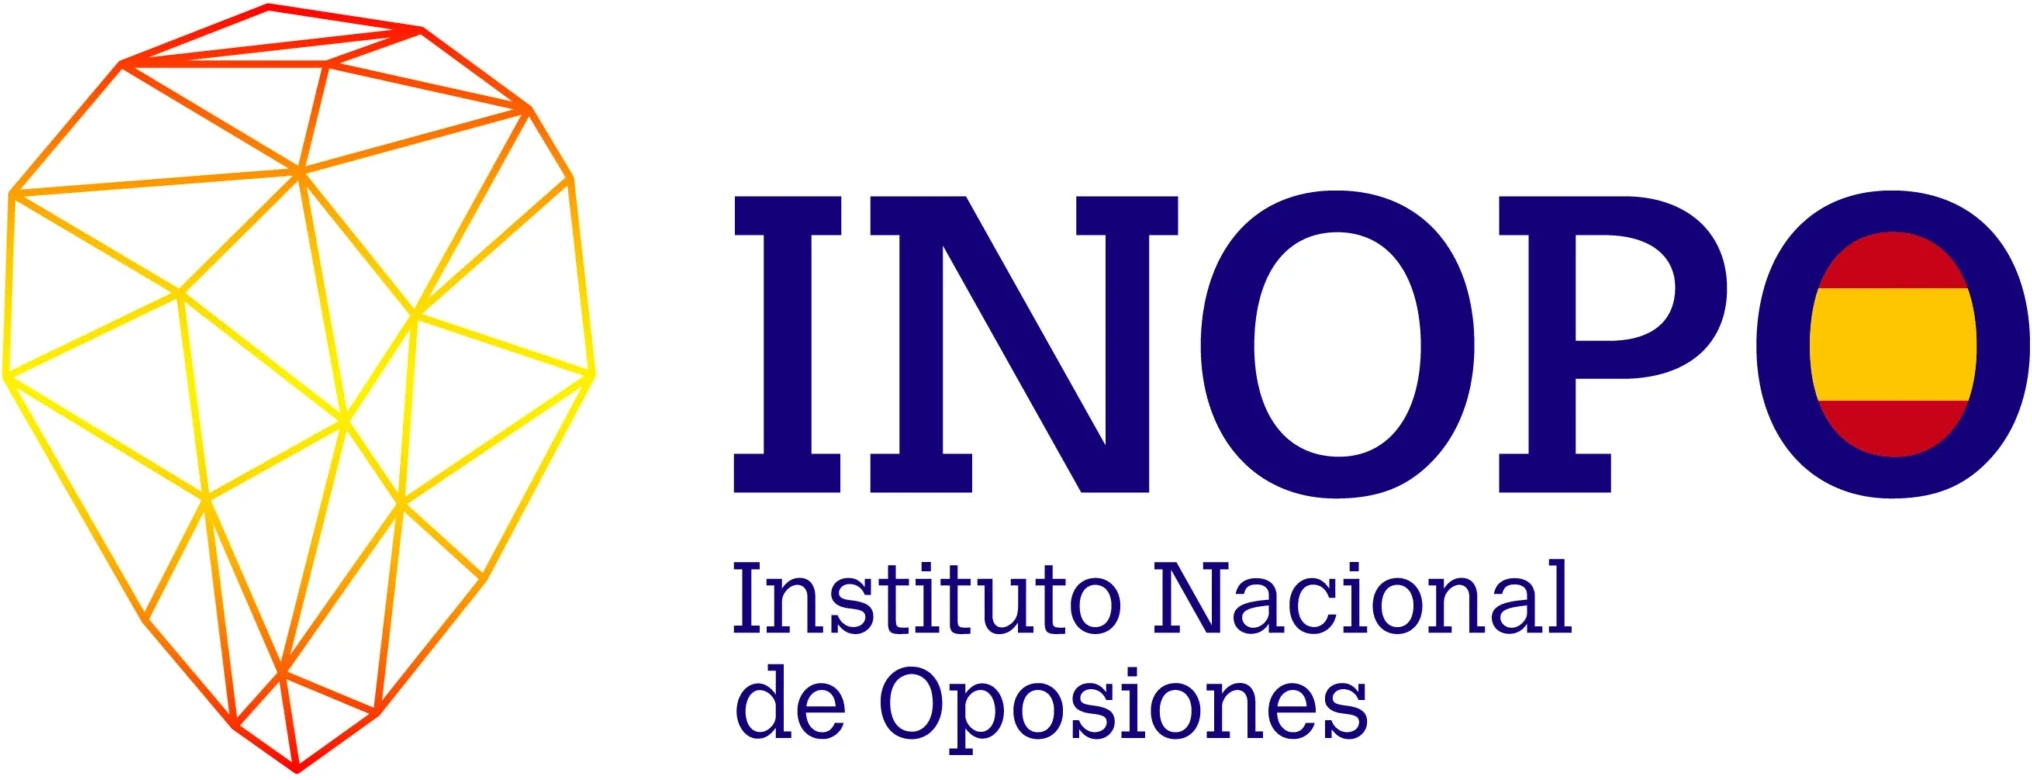 Instituto Nacional de Oposiciones